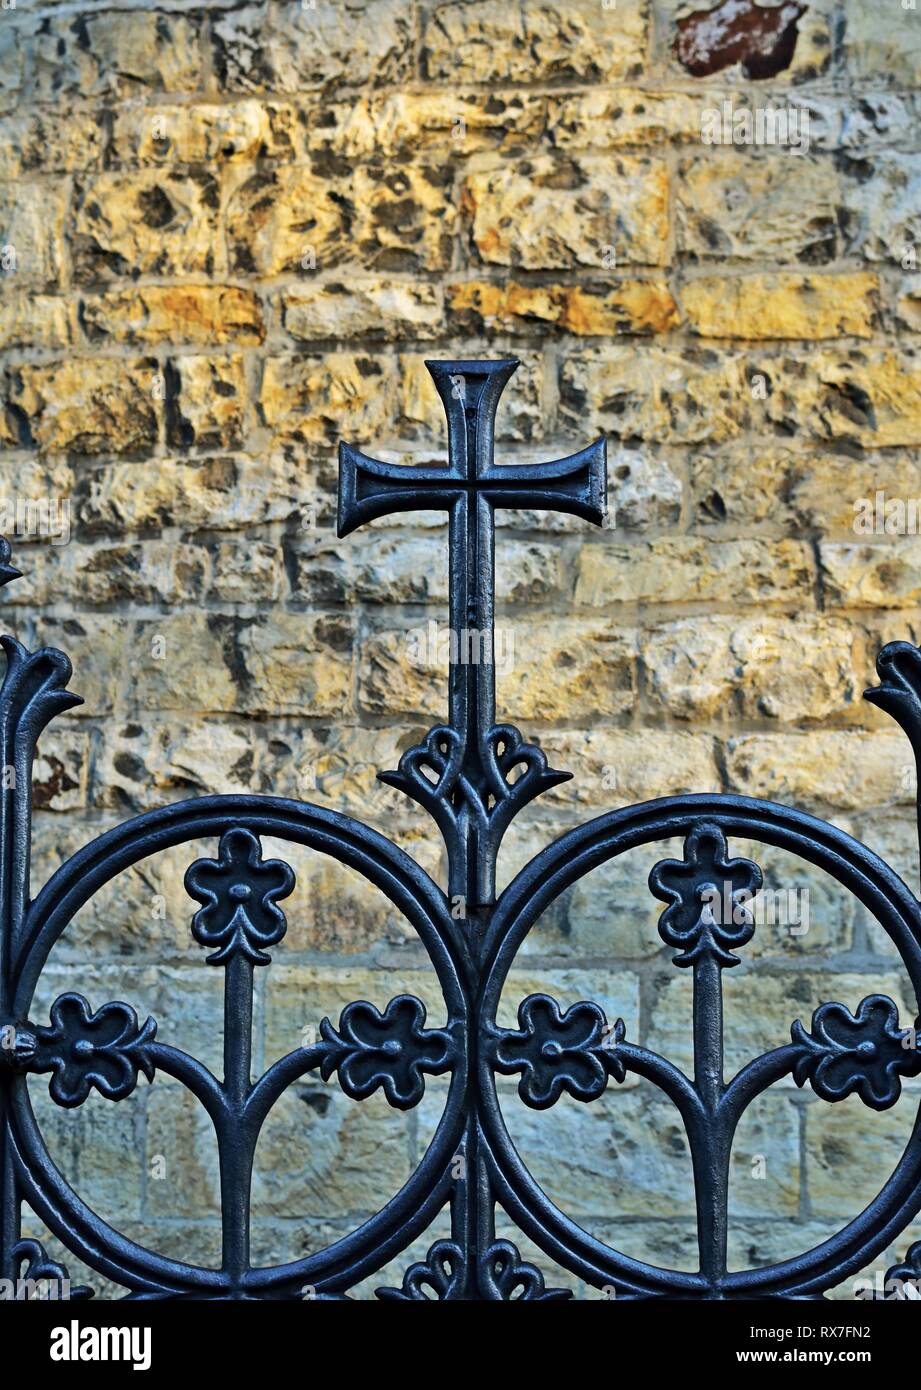 Prague minimal - iron cross Stock Photo